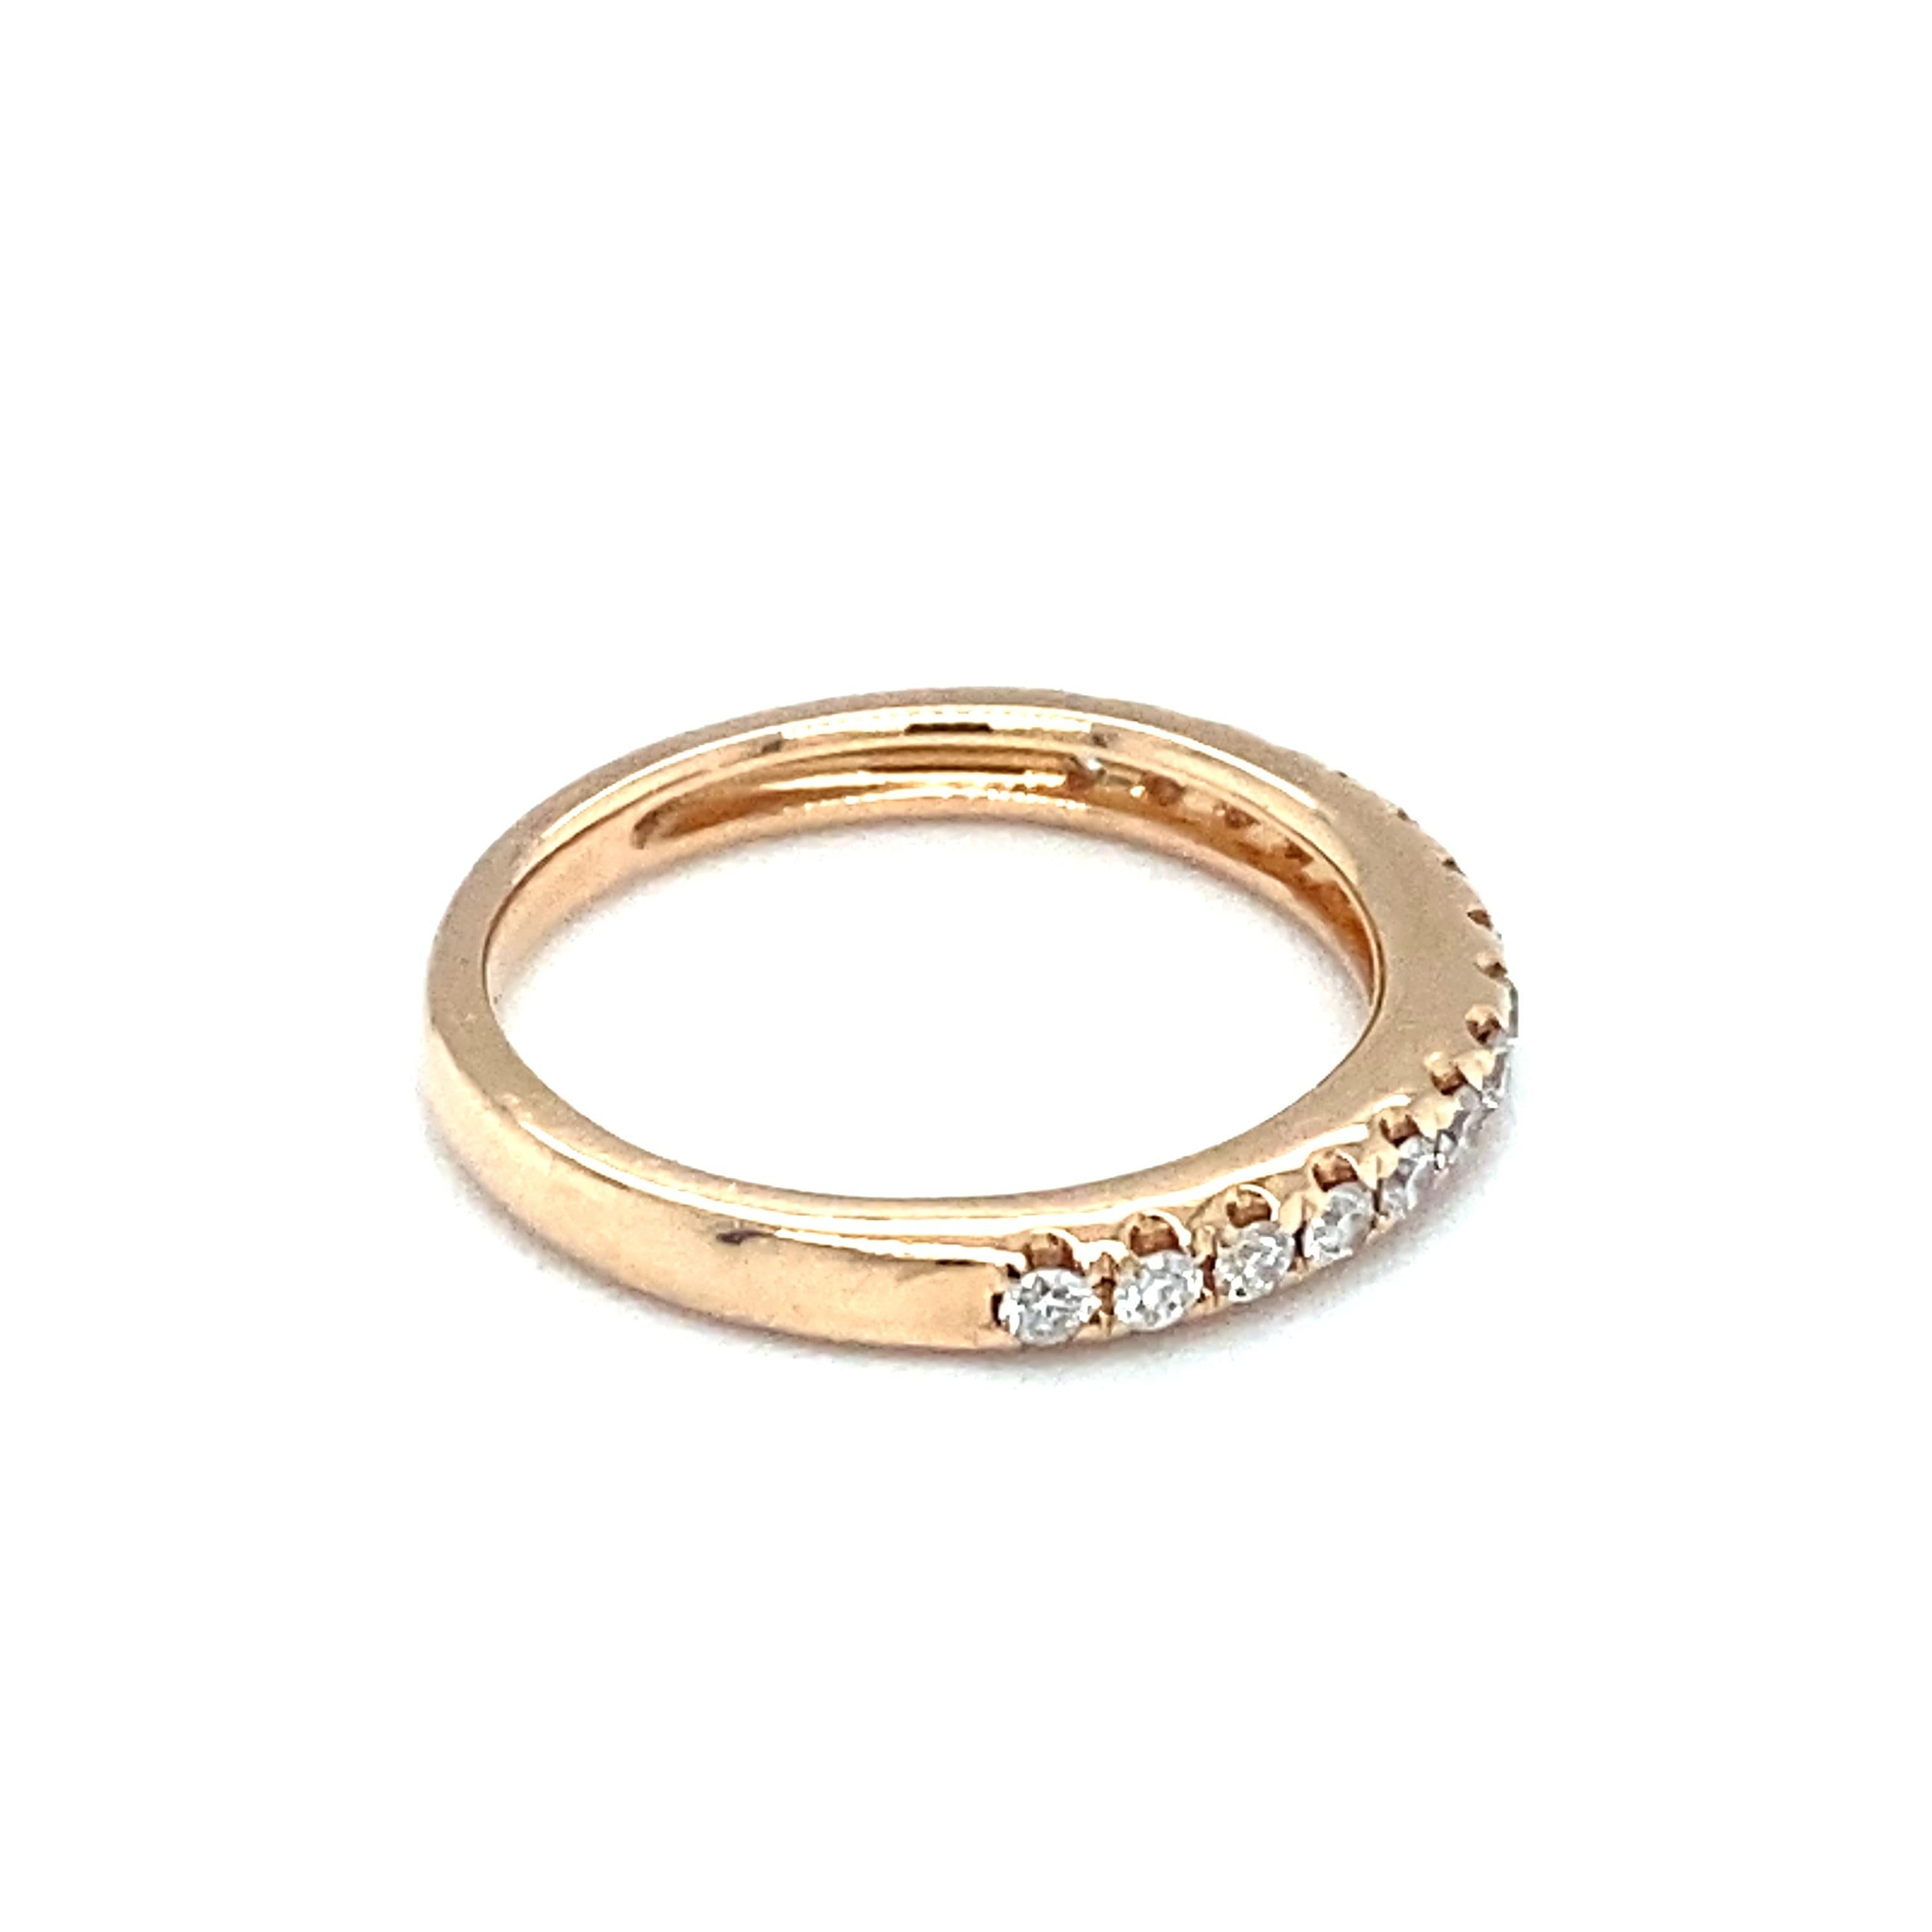 Item Details: This ring is crafted of 14 karat rose gold with diamonds halfway around the band. Stamped ARYA. 

Circa: 2000s
Metal Type: 14 Karat Rose Gold
Weight: 2.0 grams
Size: US 4, slightly resizable

Diamond Details:

Carat: 0.28 carat total